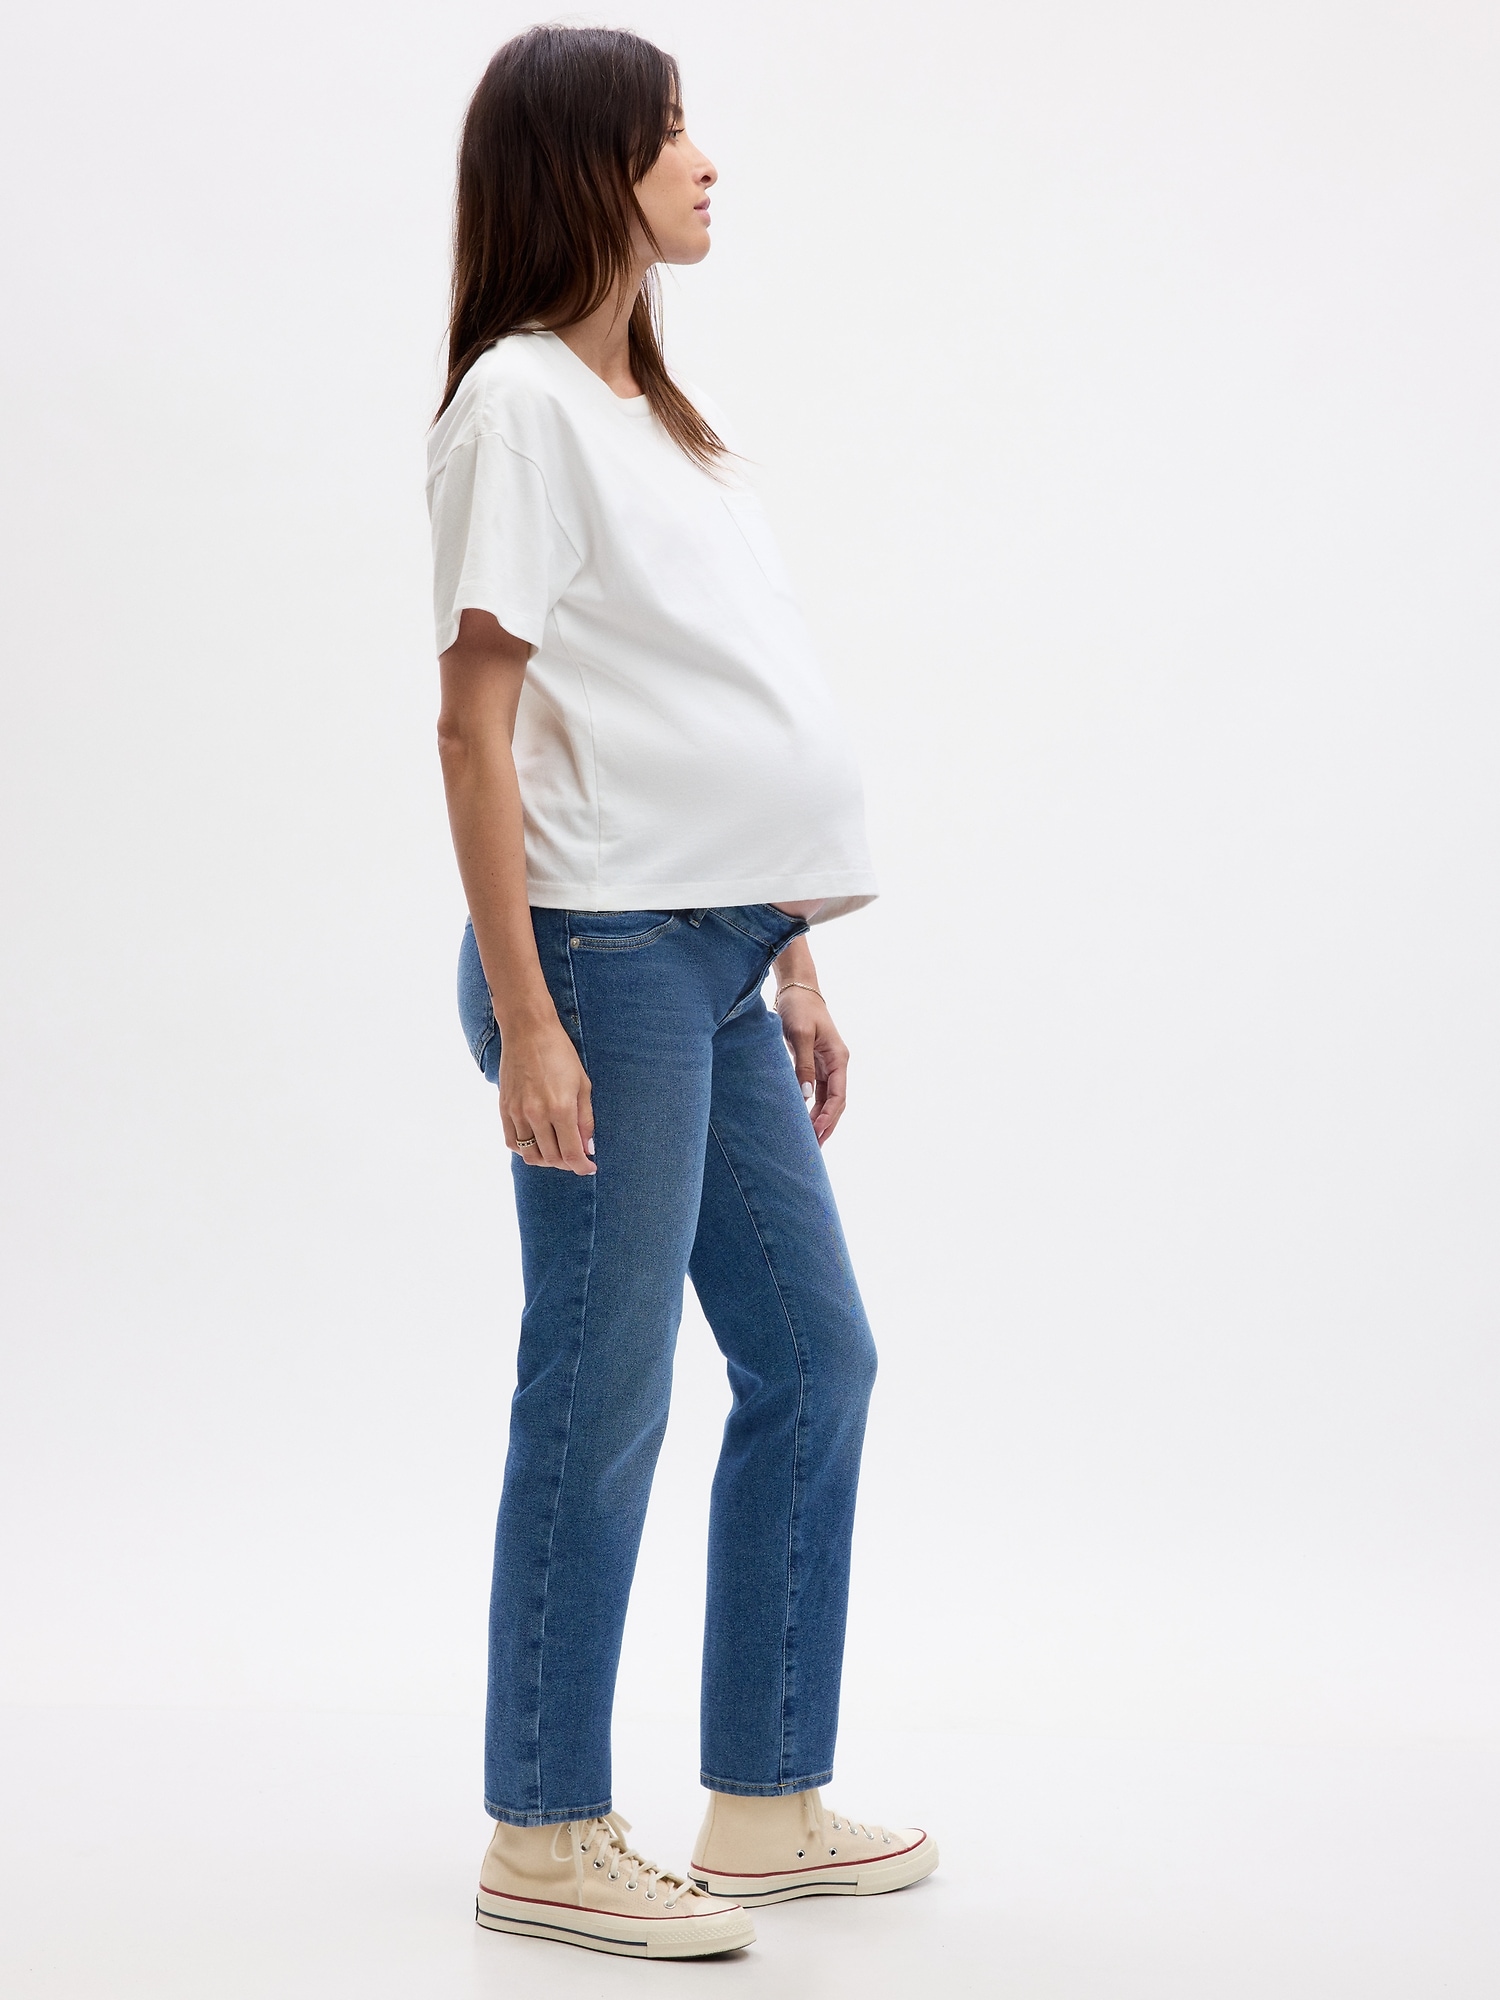 Gap Maternity INSET Side Panel Slim Ankle Pants Size 2- Black- NWOT